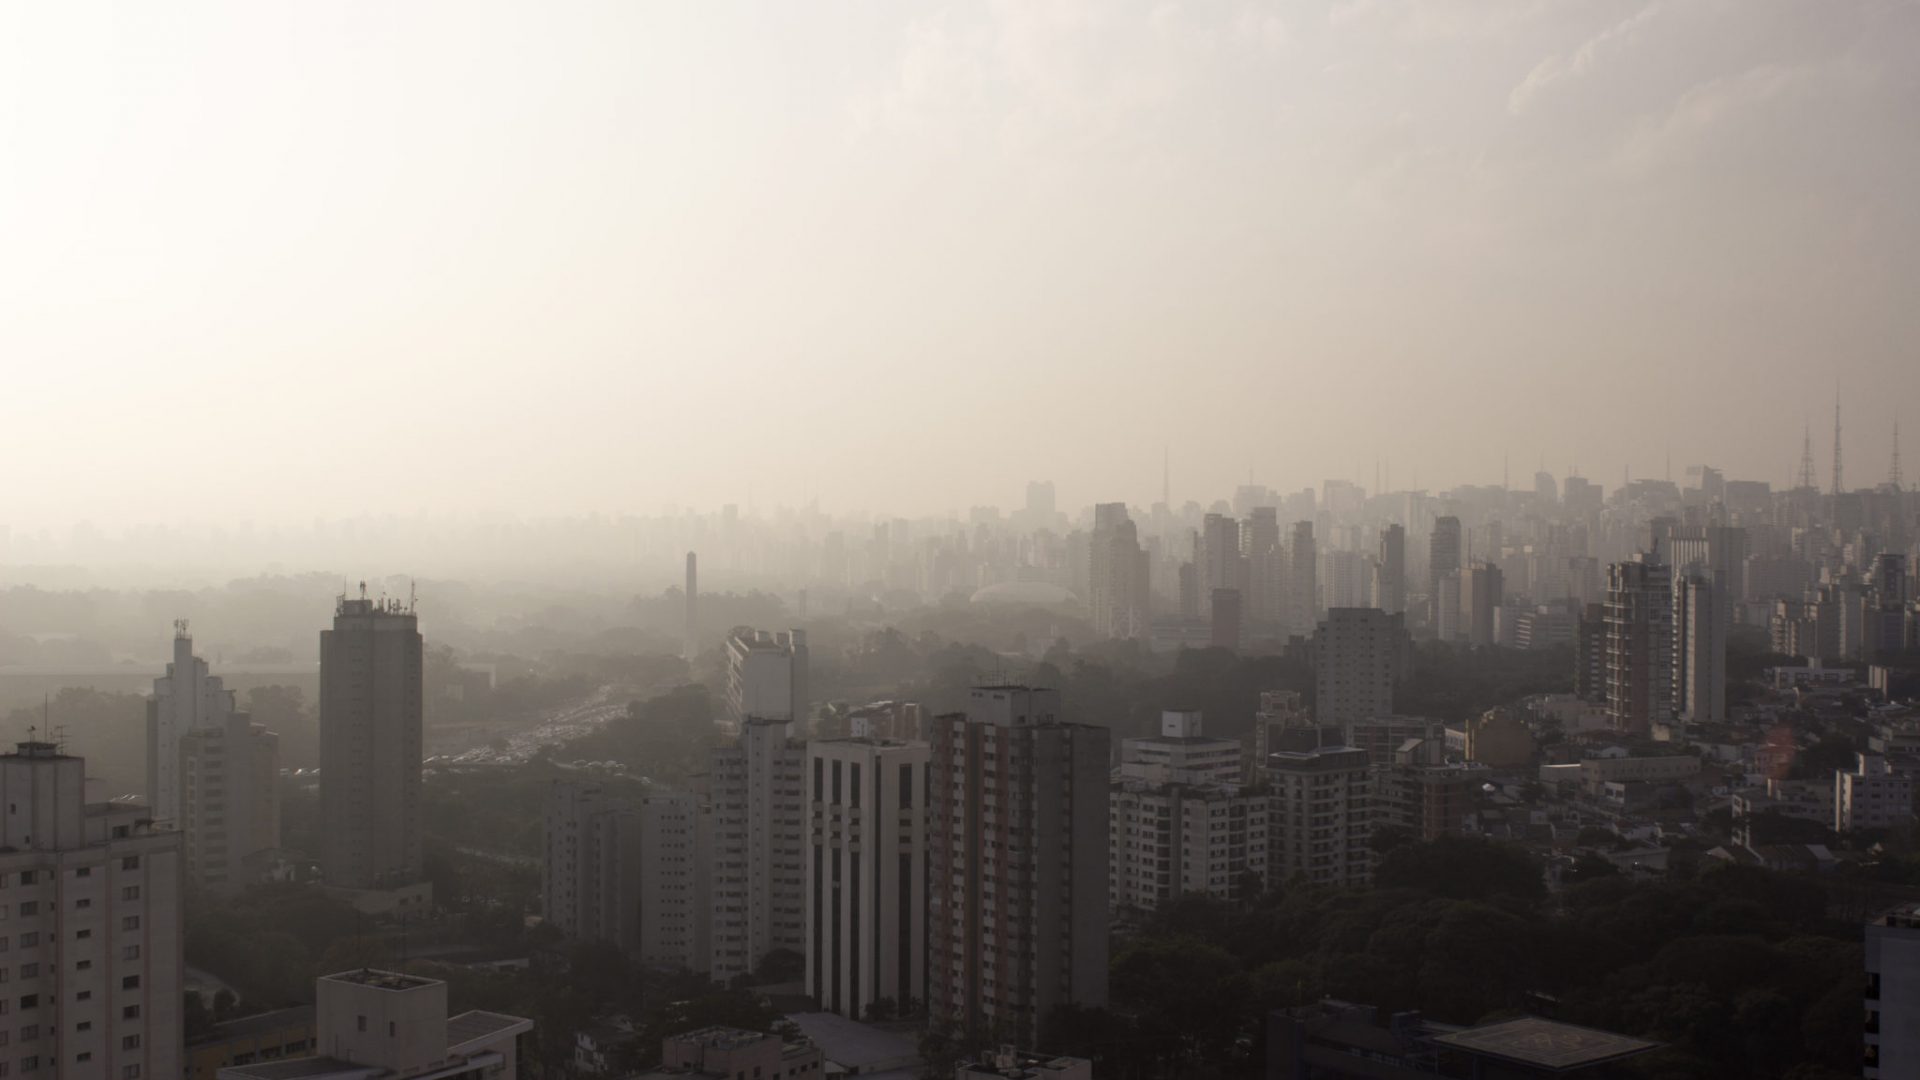 Air pollution over Sao Paulo Brazil Stock Photo - Alamy